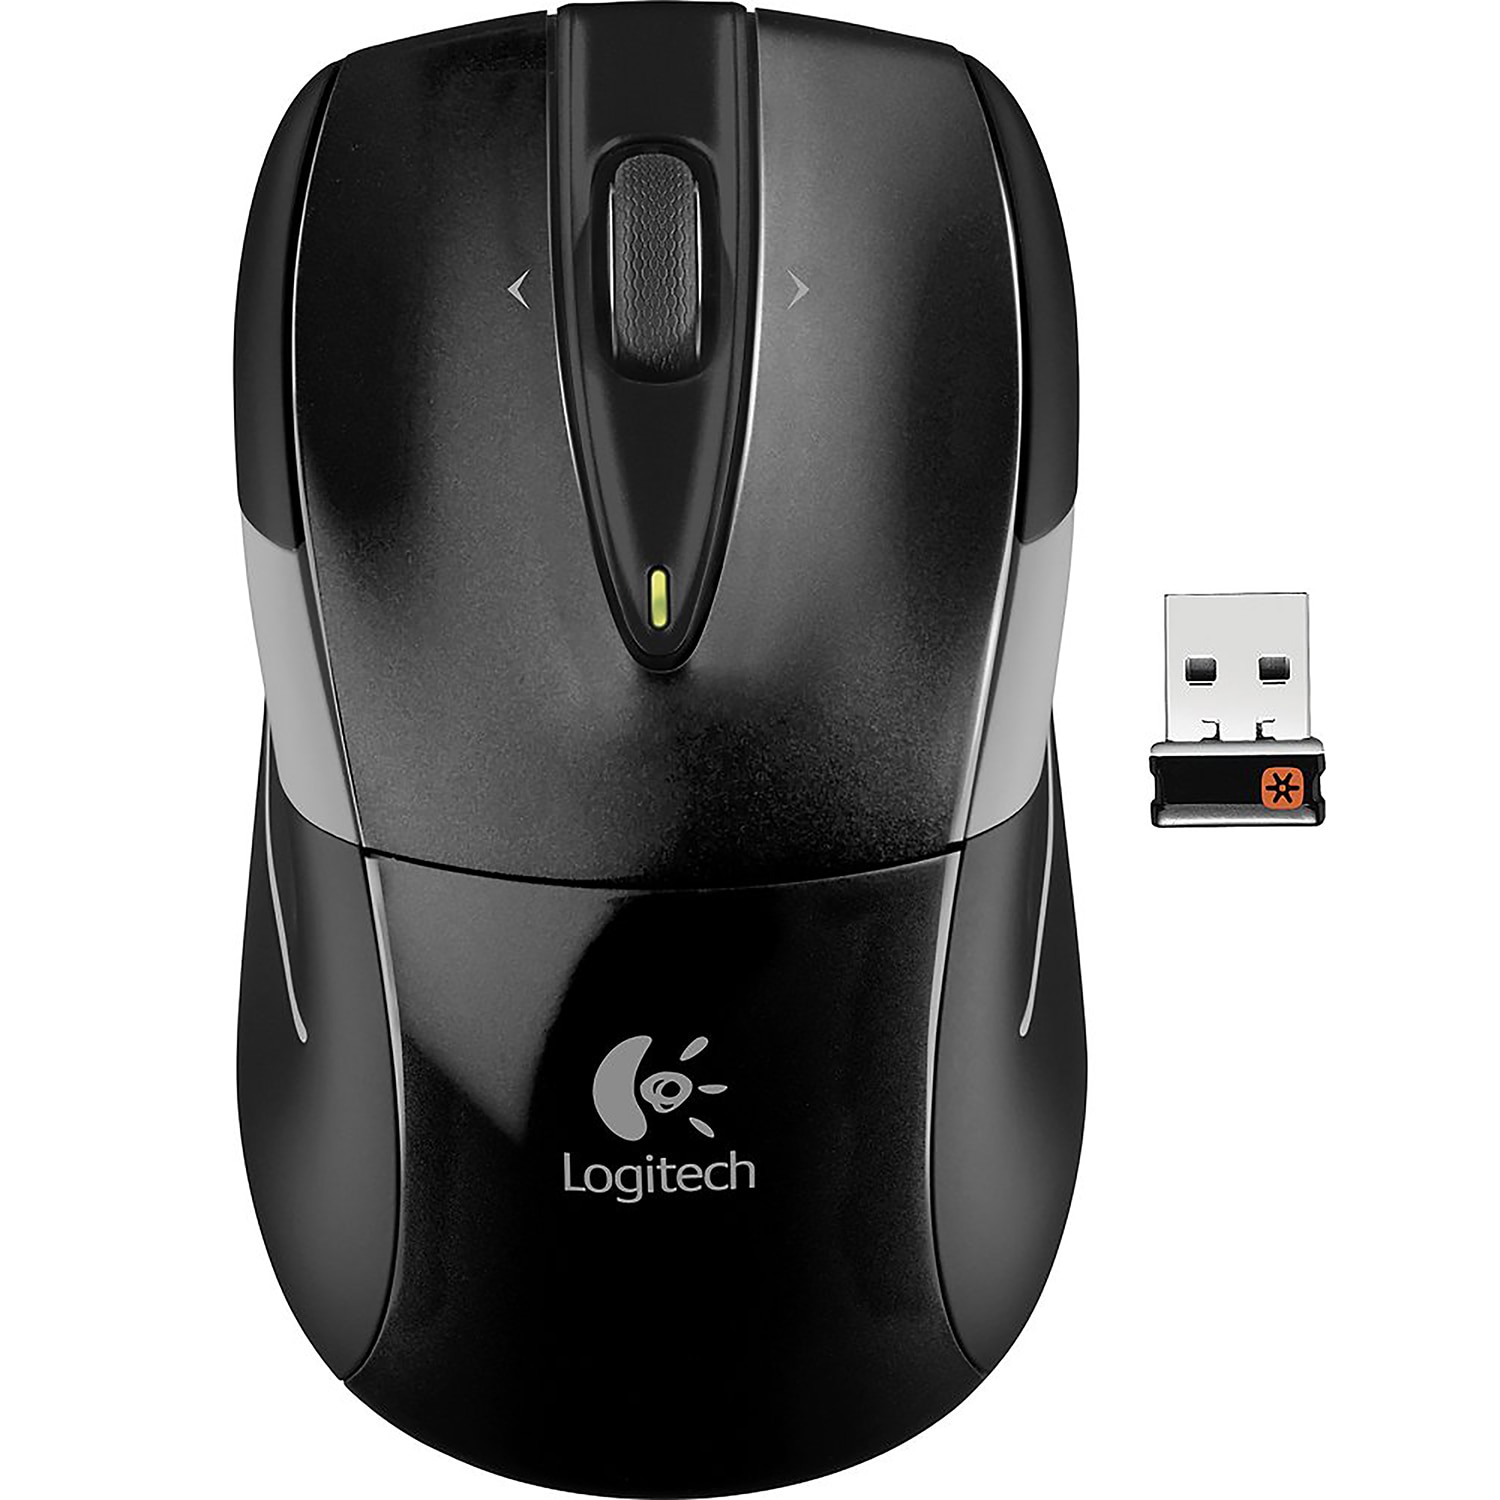 Logitech M525 Wireless Laser Mouse Black/Gray